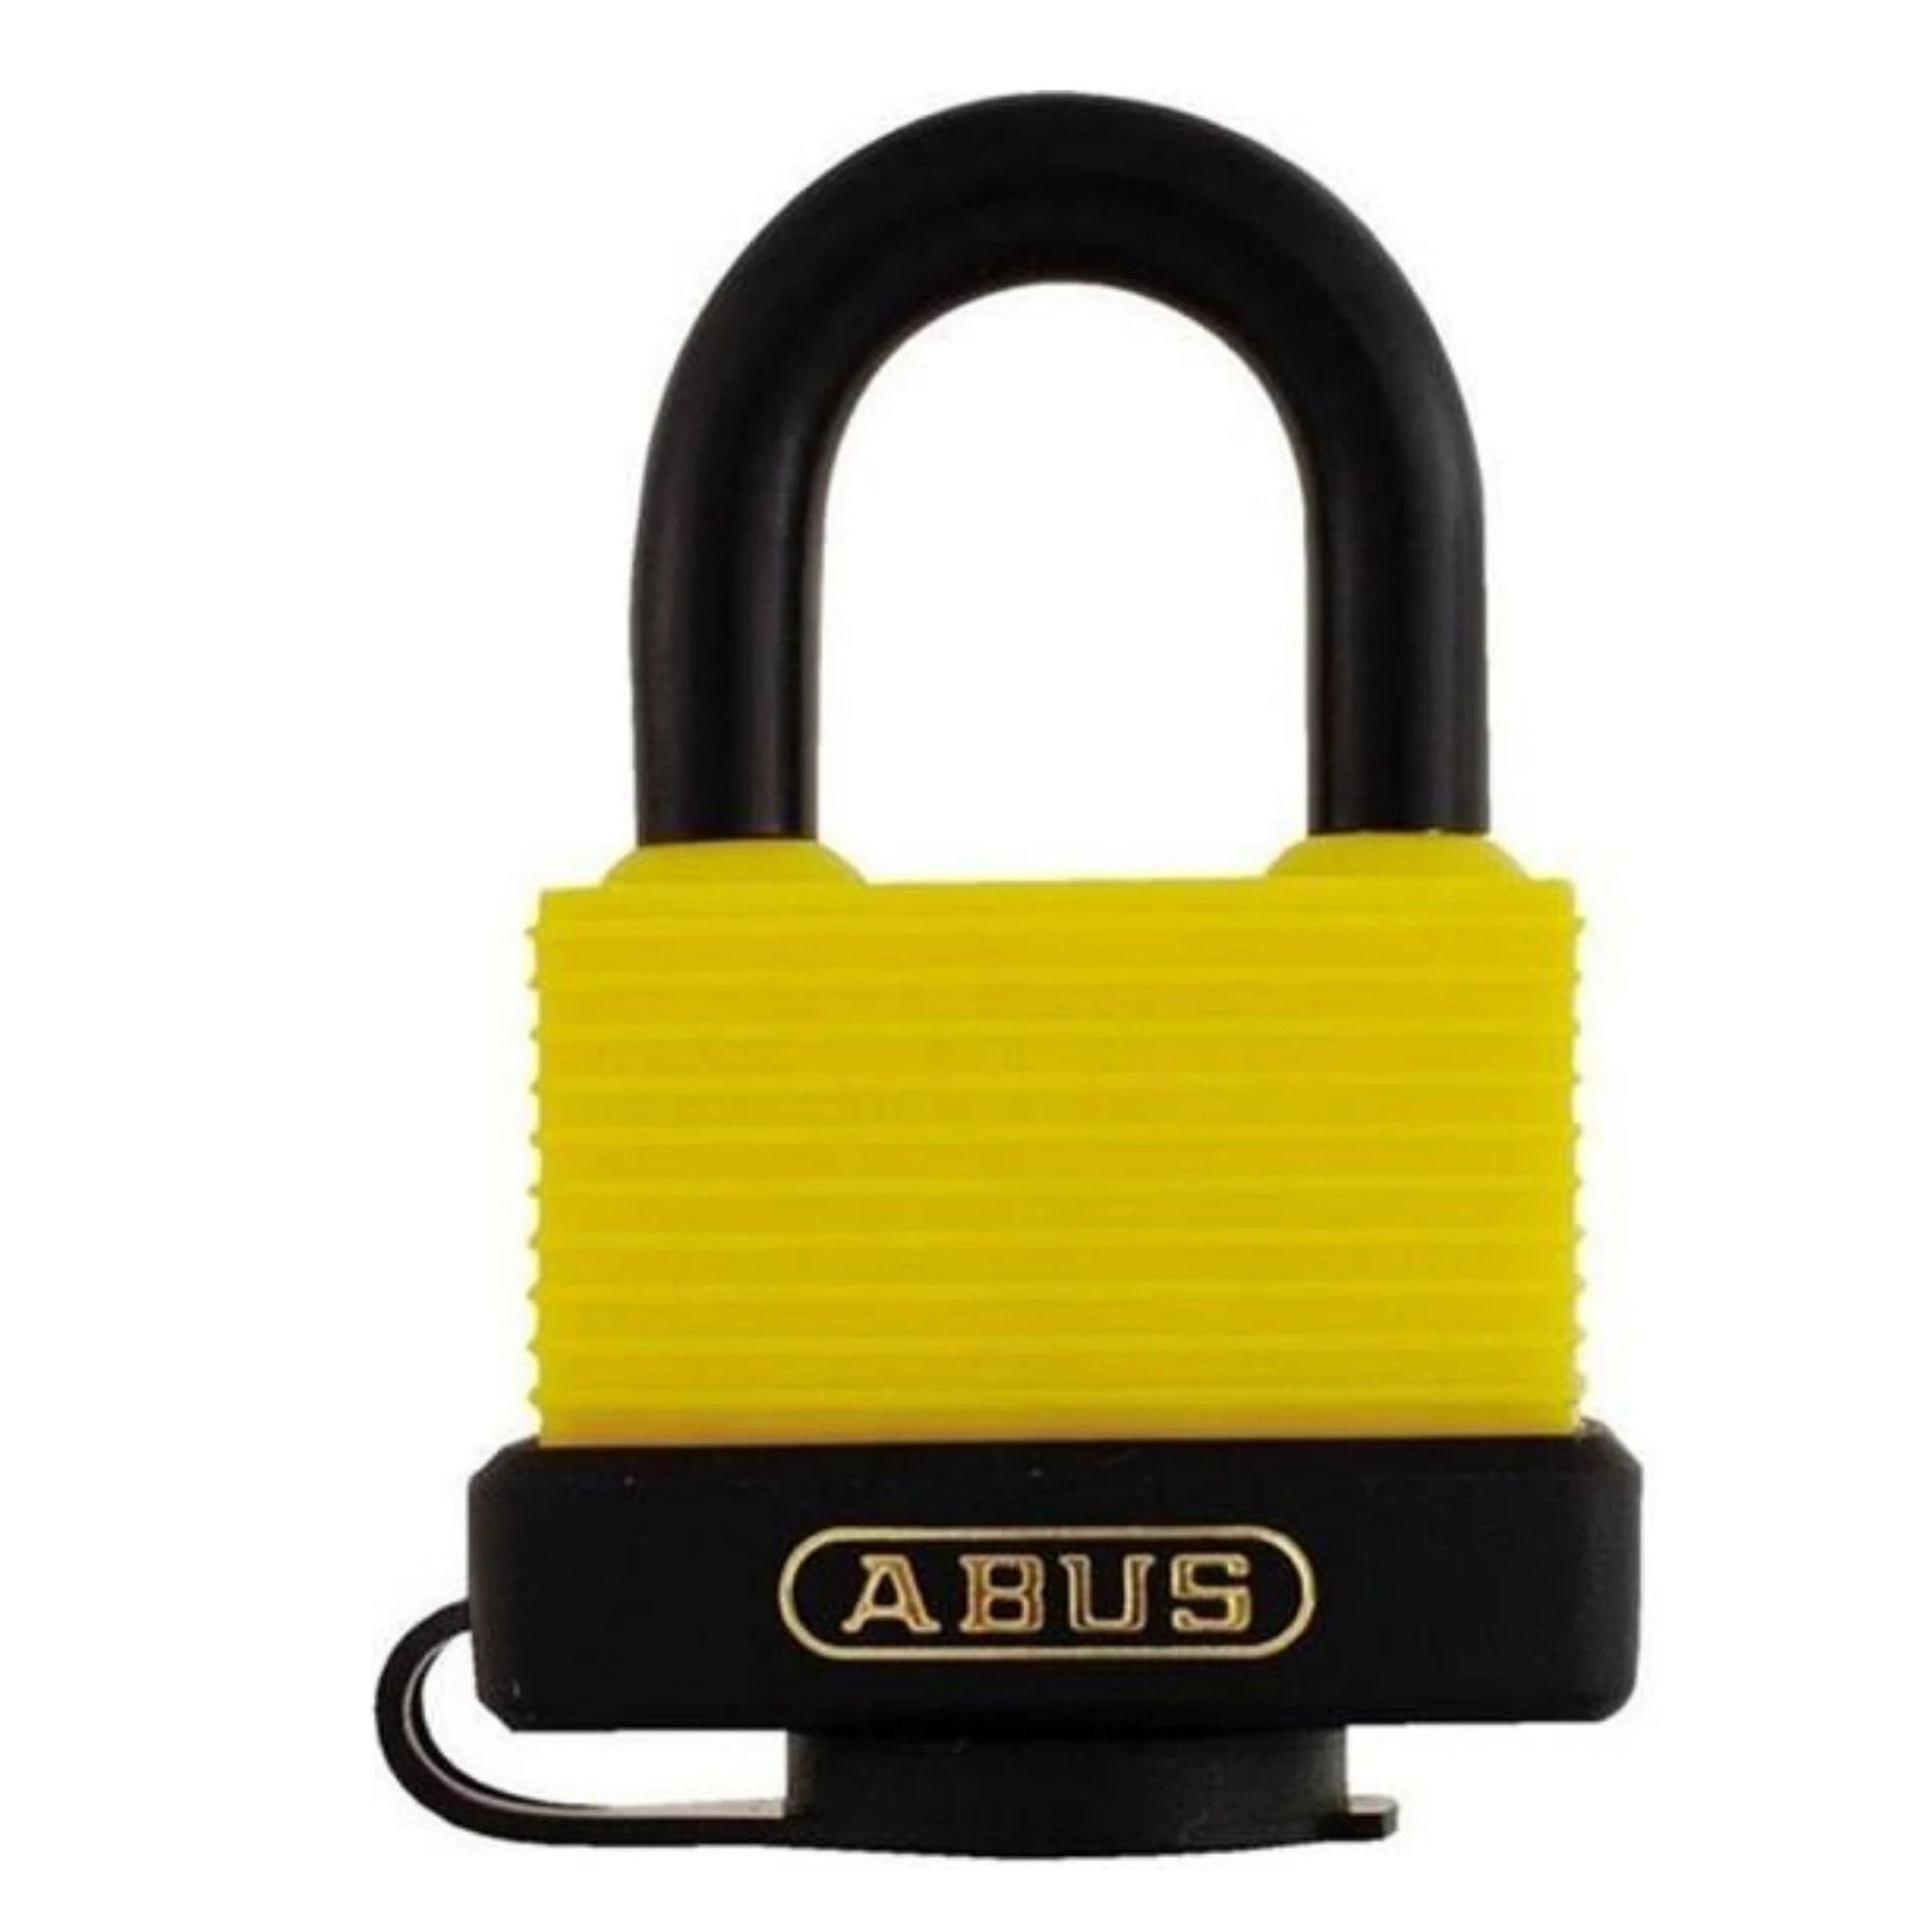 Abus 70/45 KA 6403 Lock Keyed Alike Weatherproof Brass Padlocks Keyed Alike to Match Existing Key Number KA6403 - The Lock Source